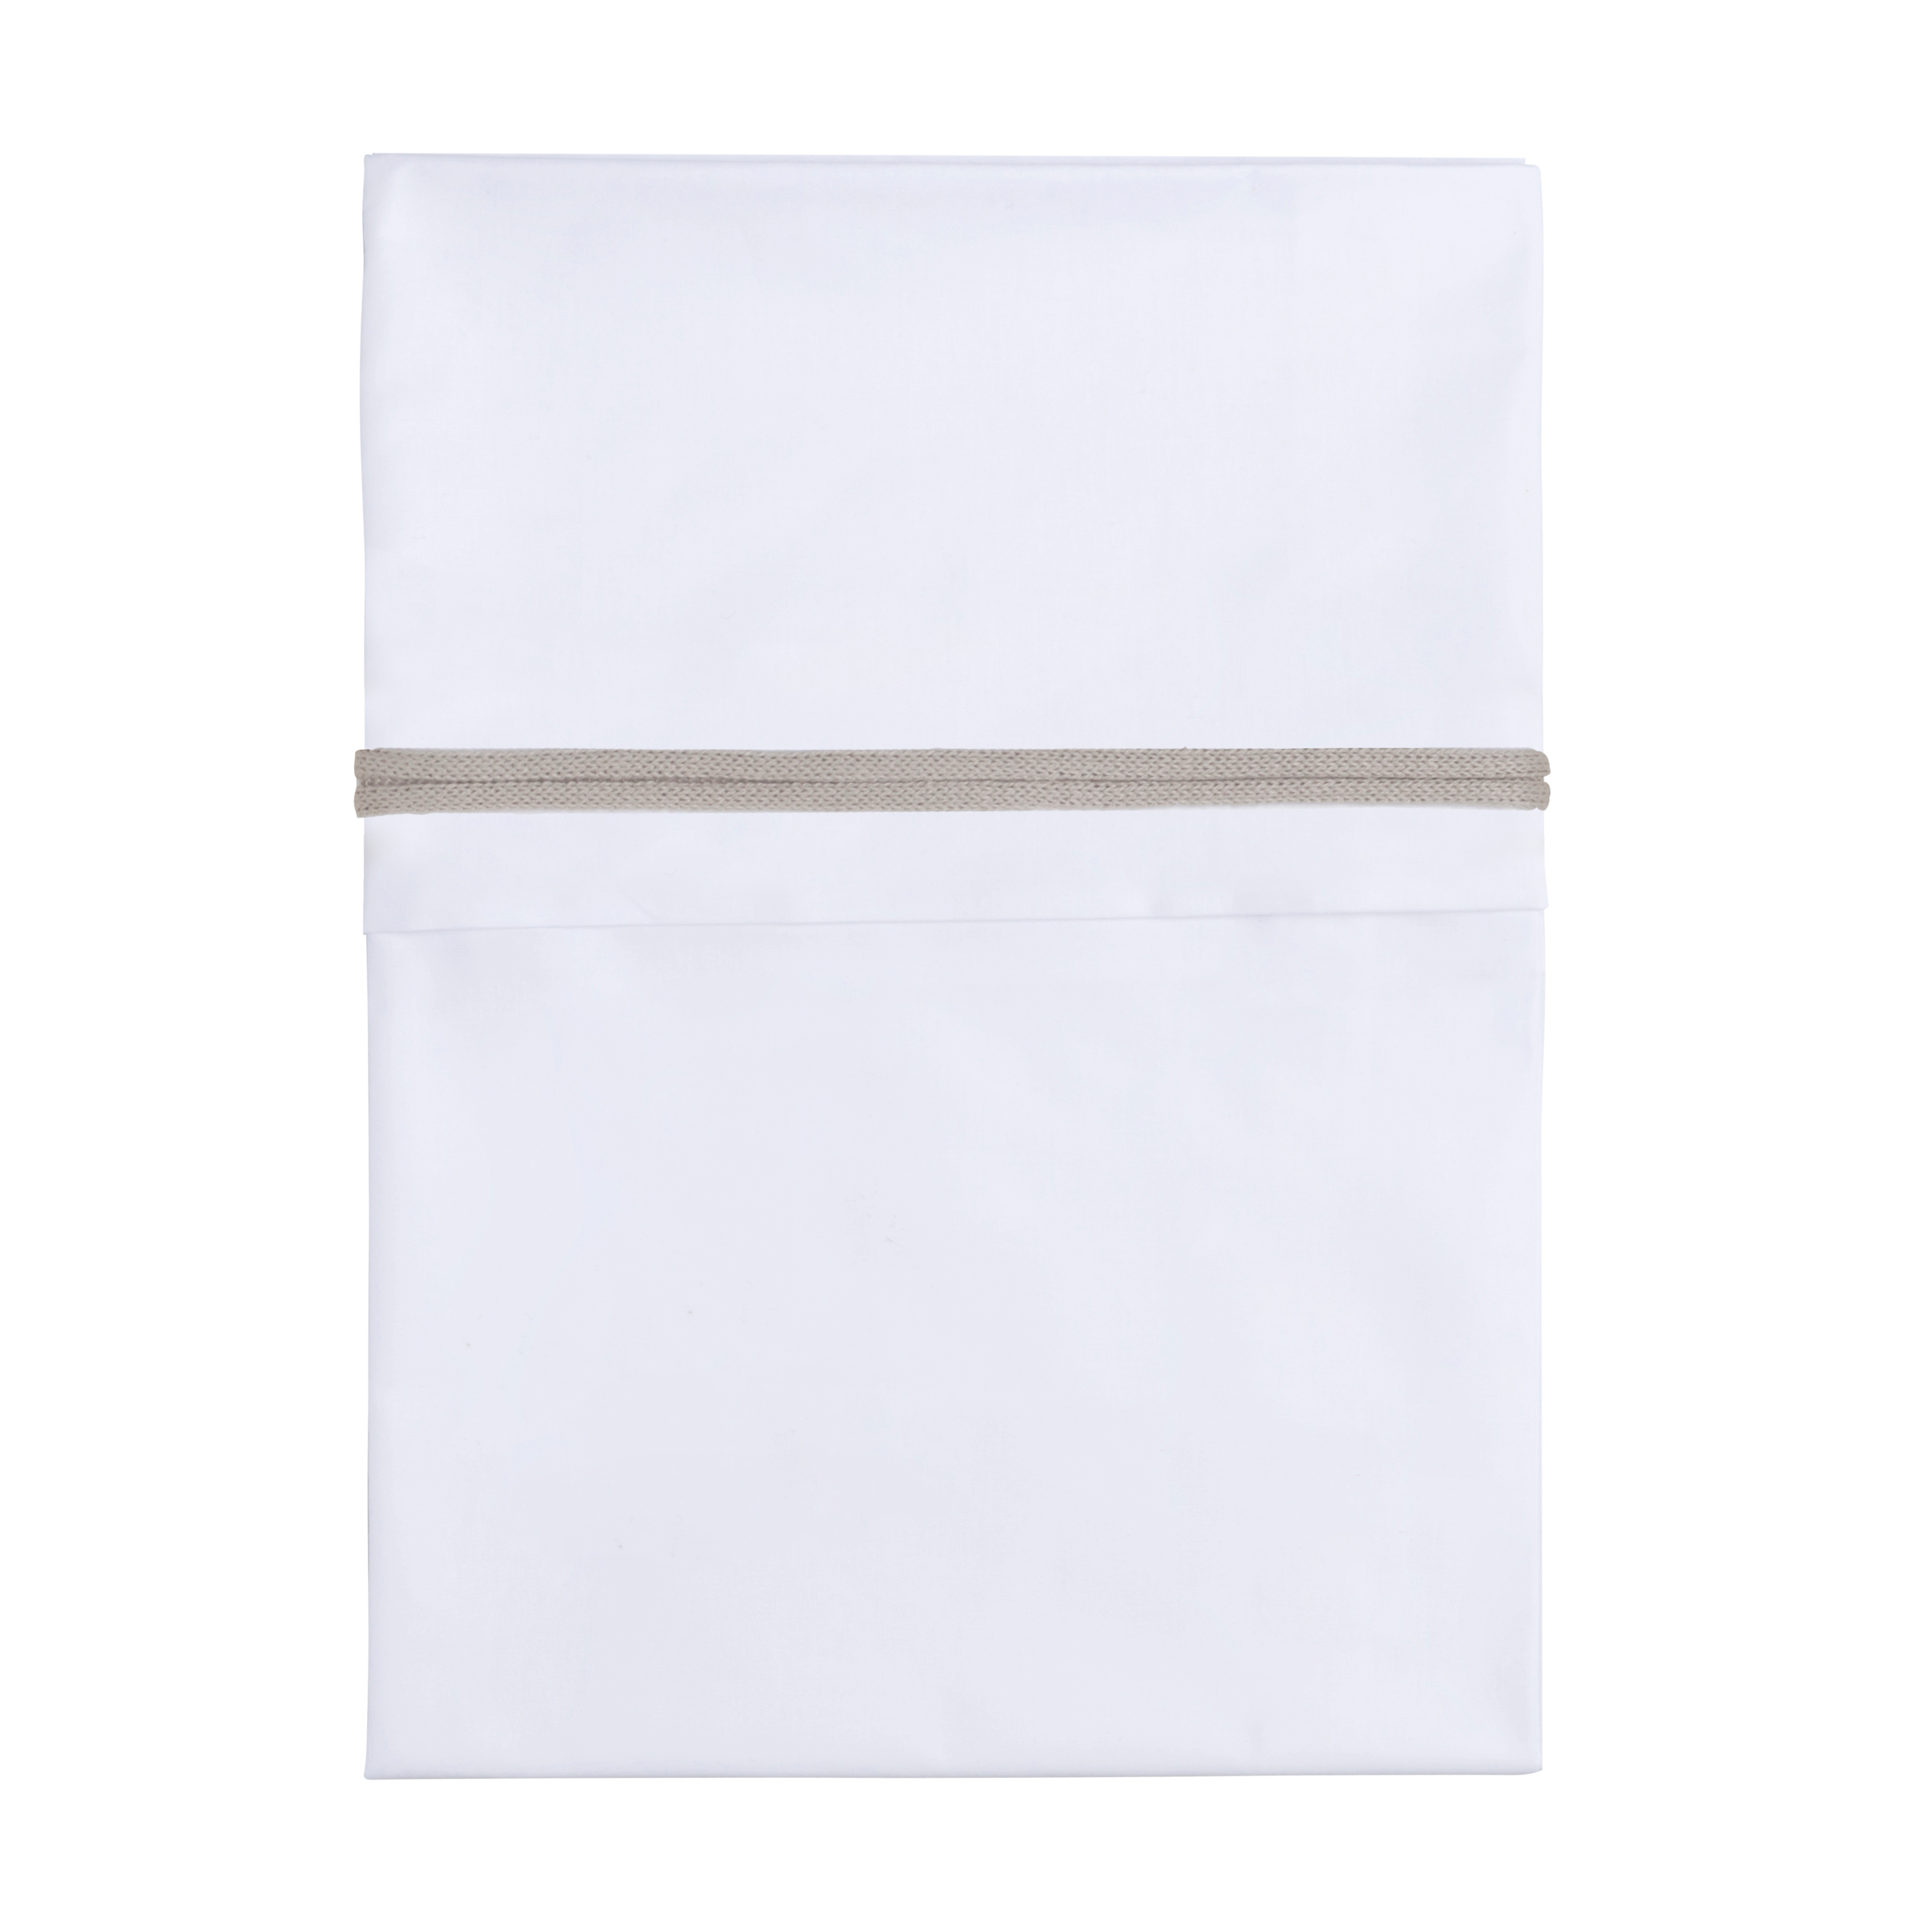 Cot sheet knitted ribbon loam/white